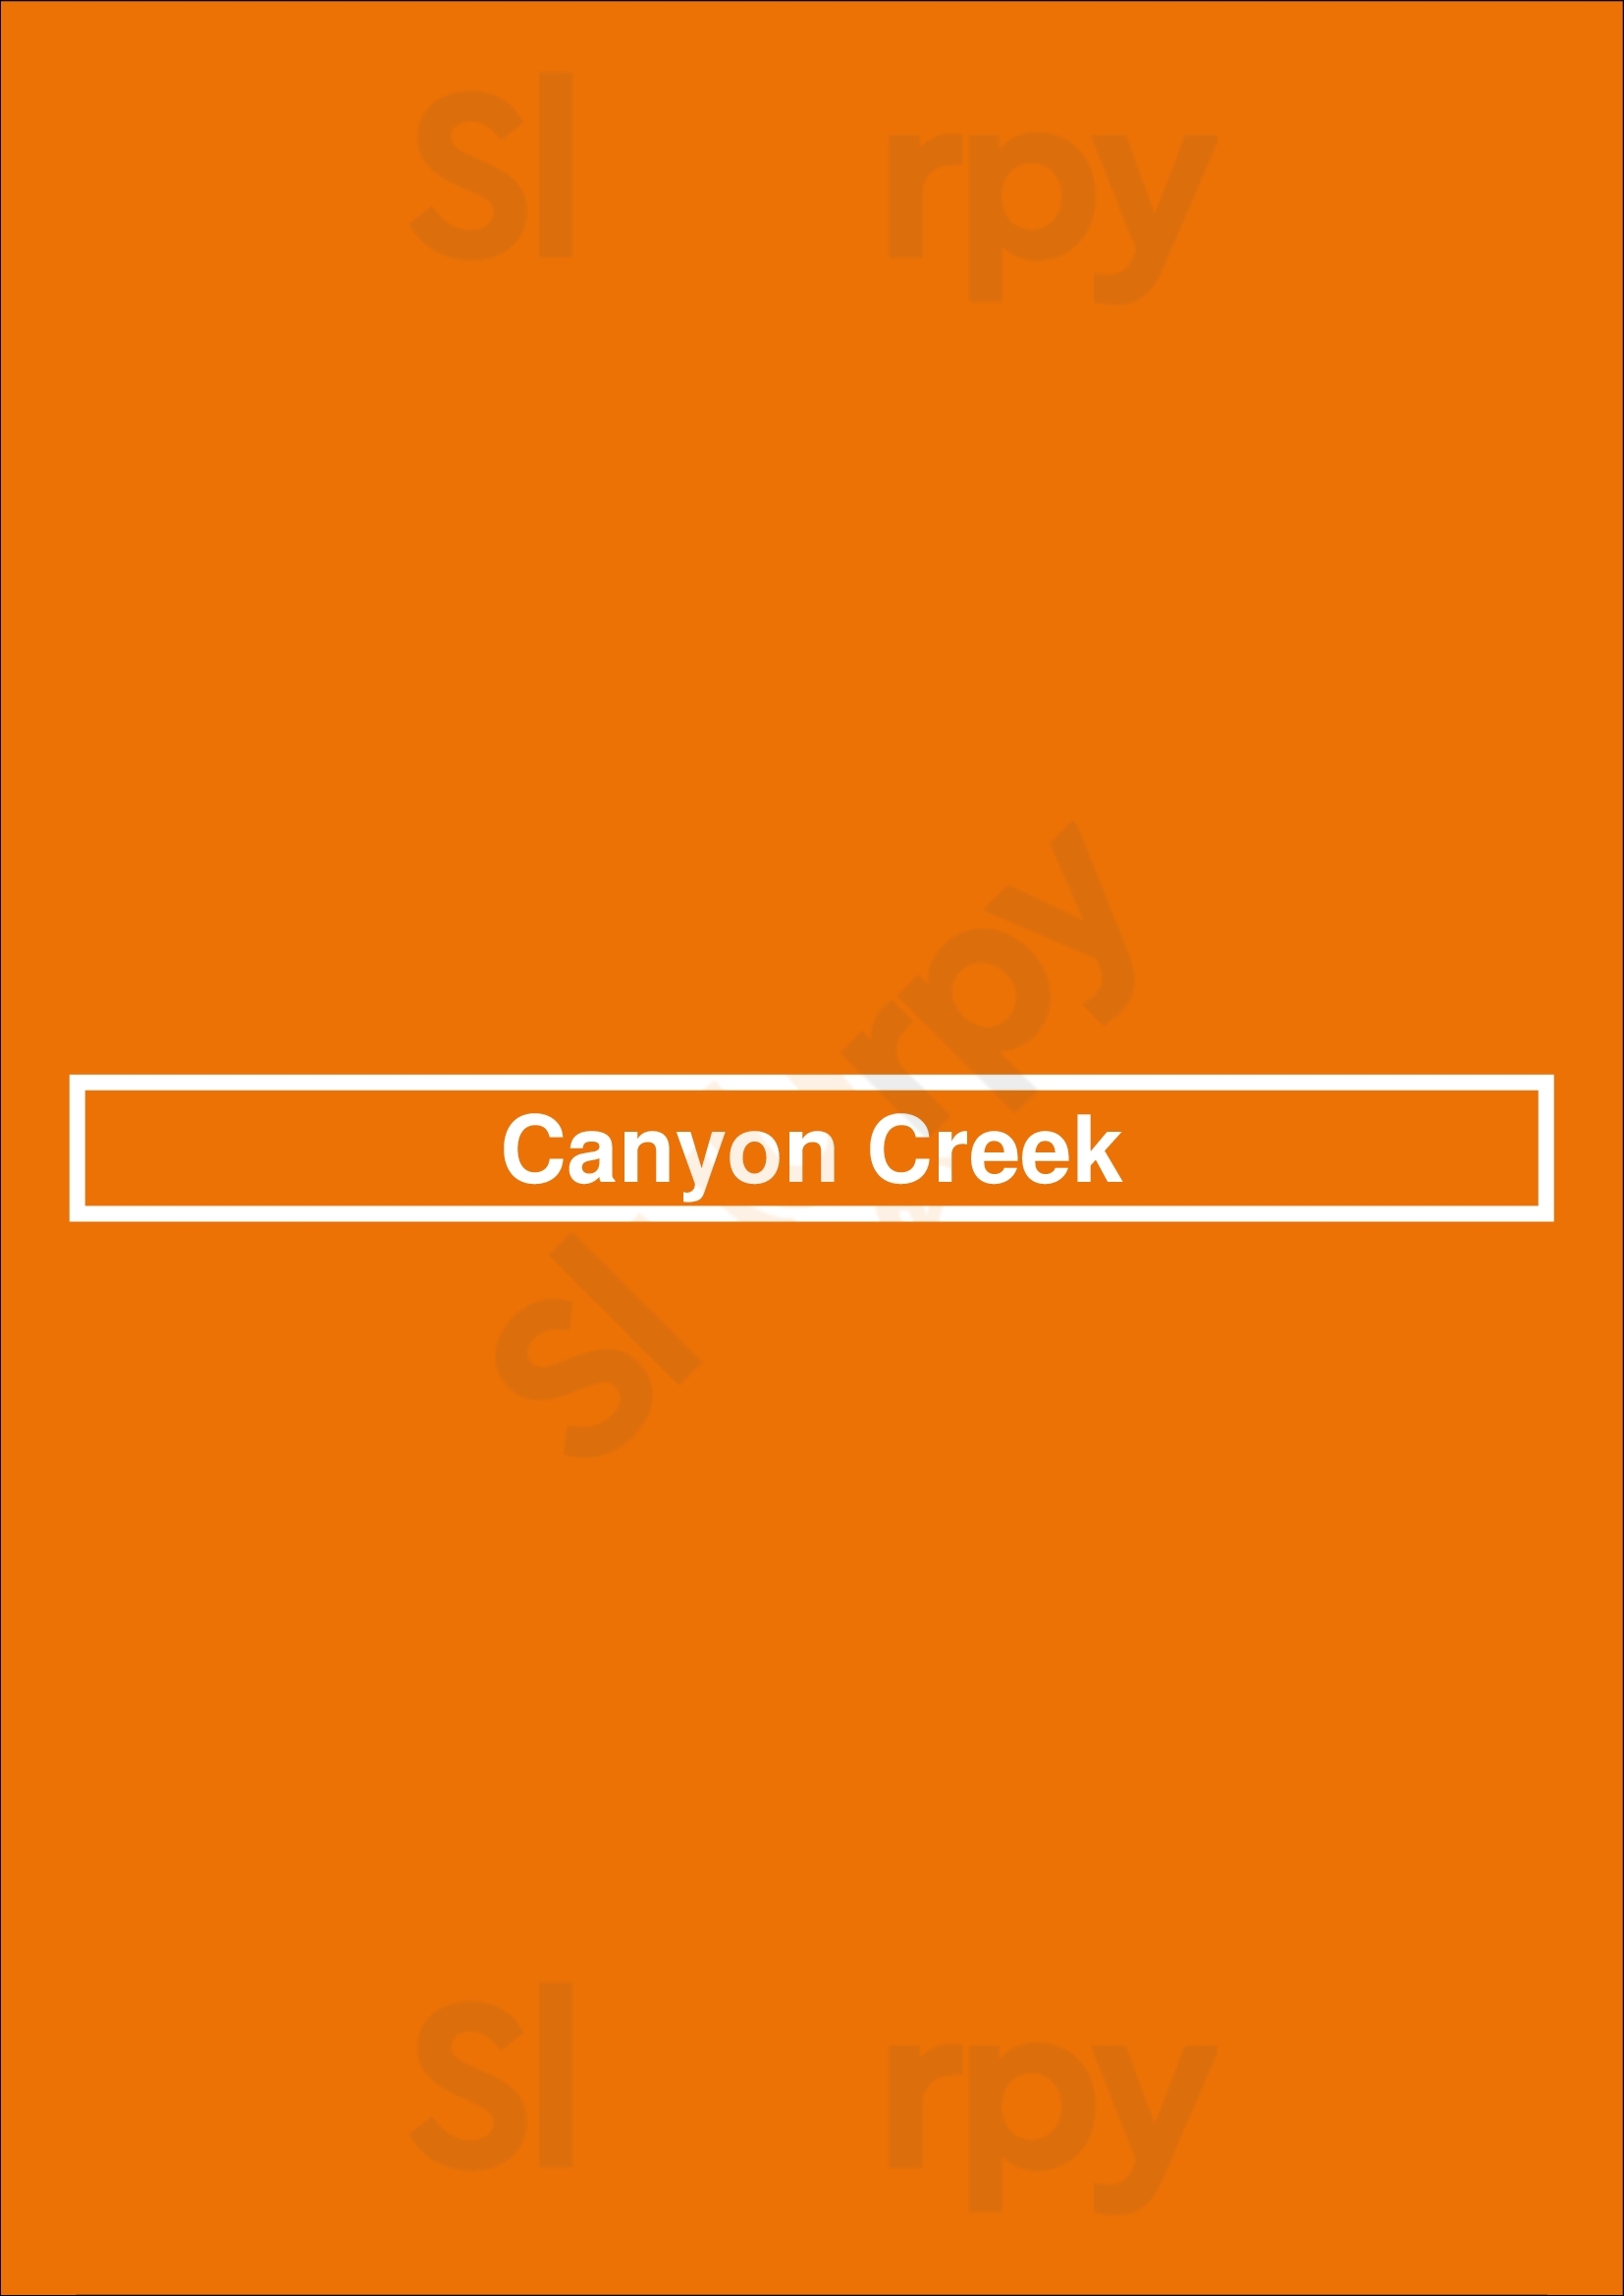 Canyon Creek Burlington Menu - 1